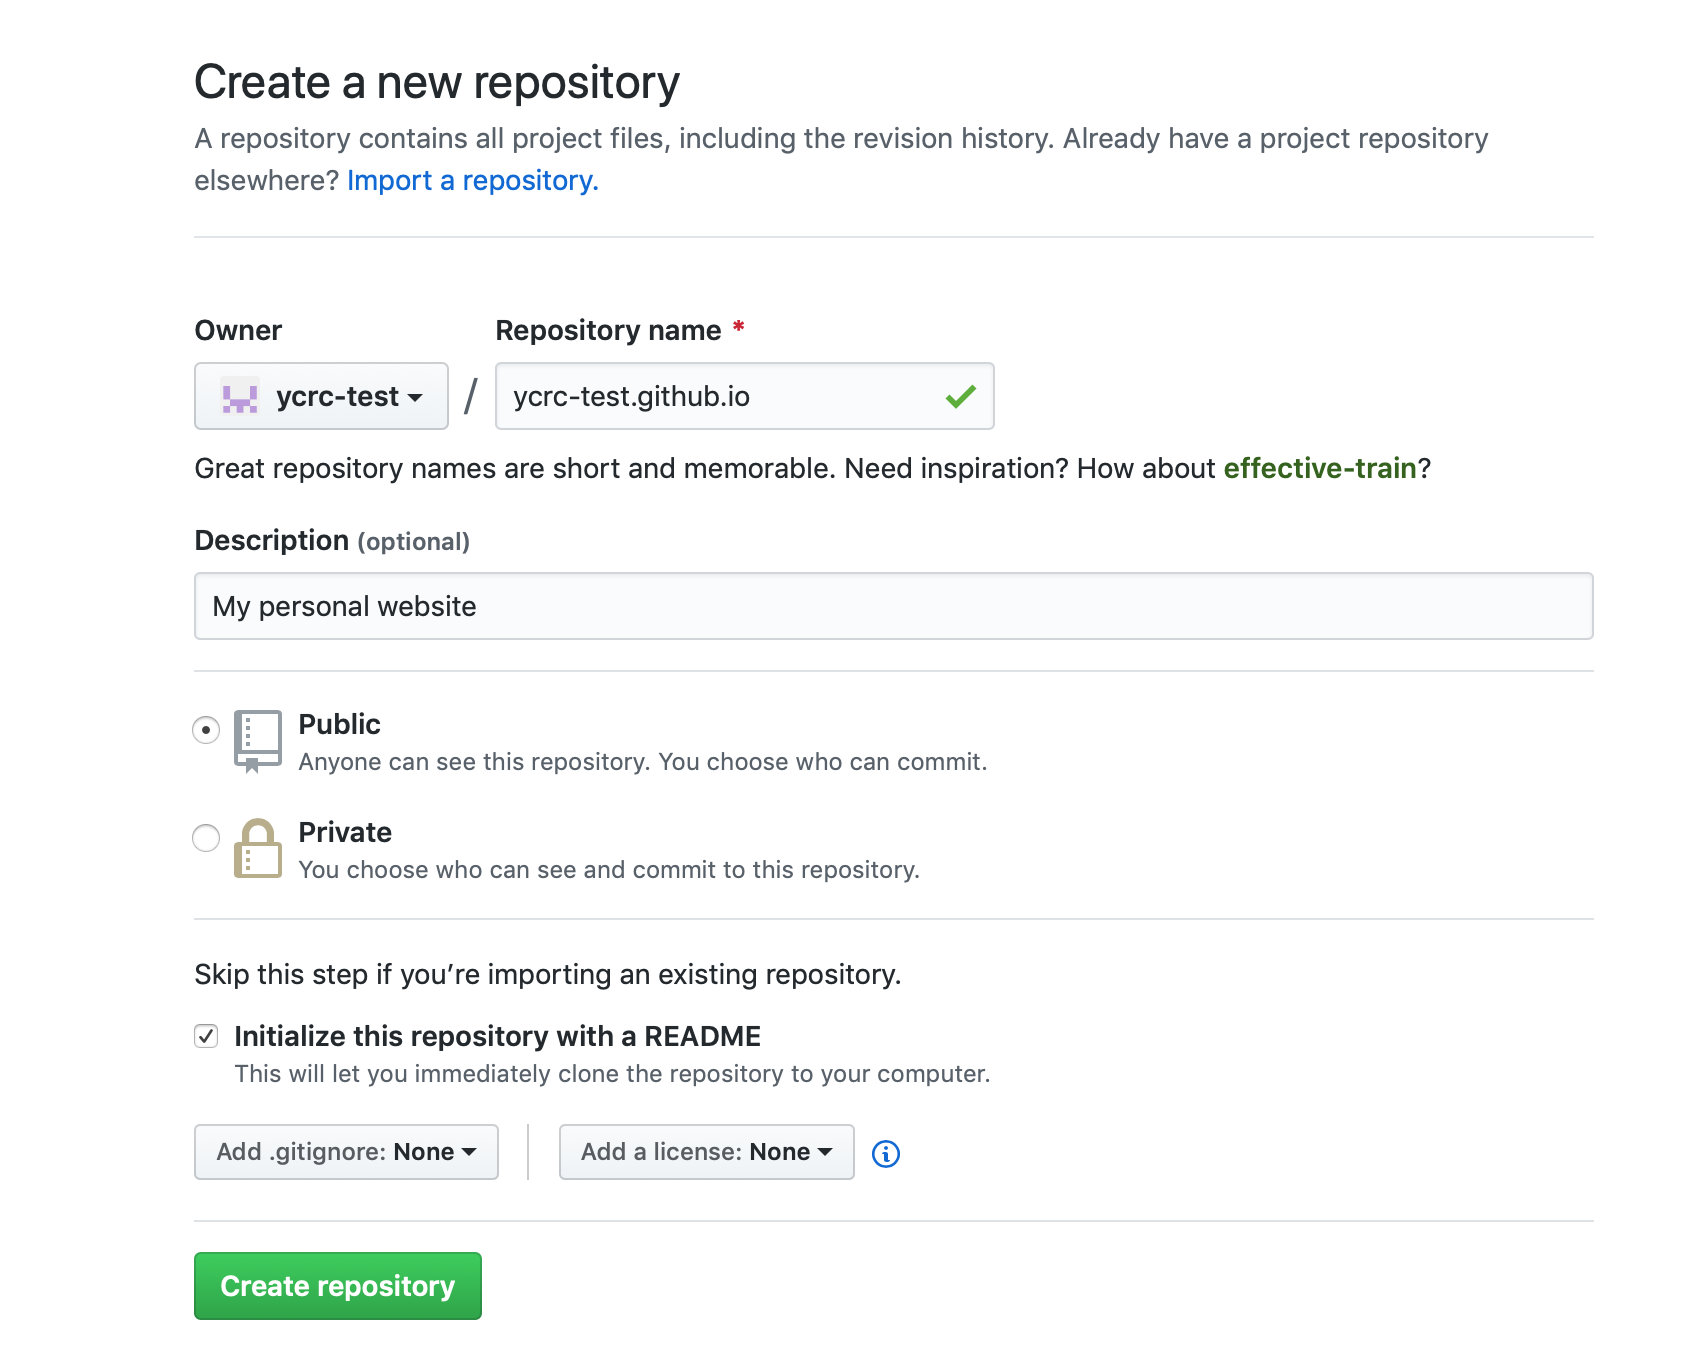 Create the repository